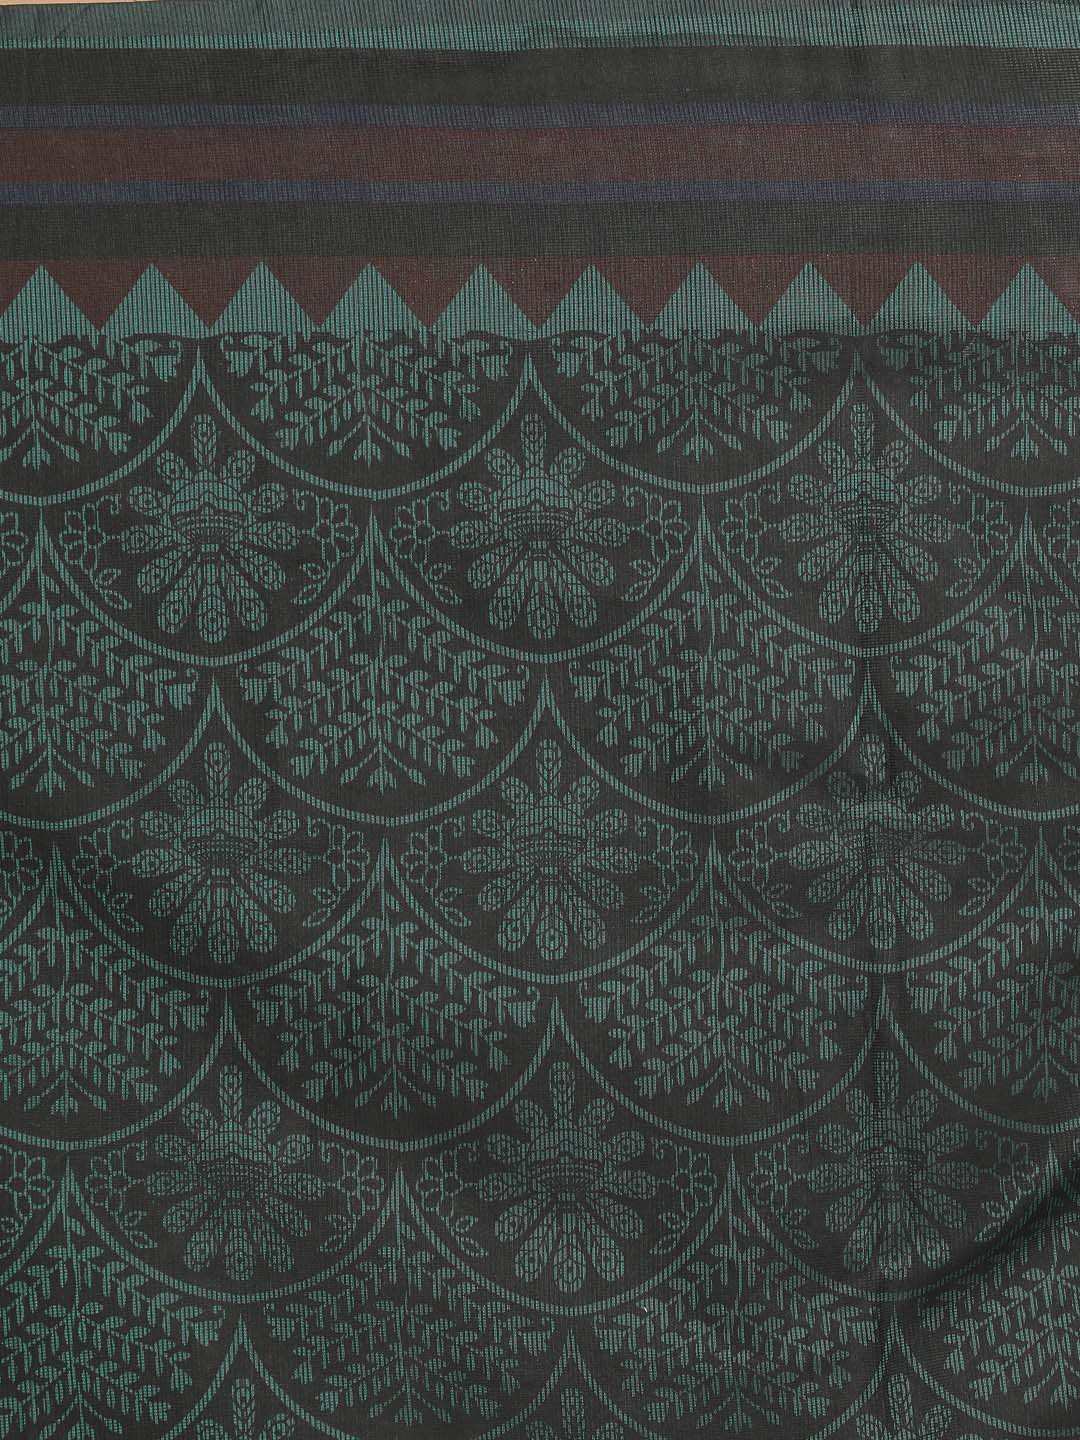 Indethnic Printed Cotton Blend Saree in Green - Saree Detail View